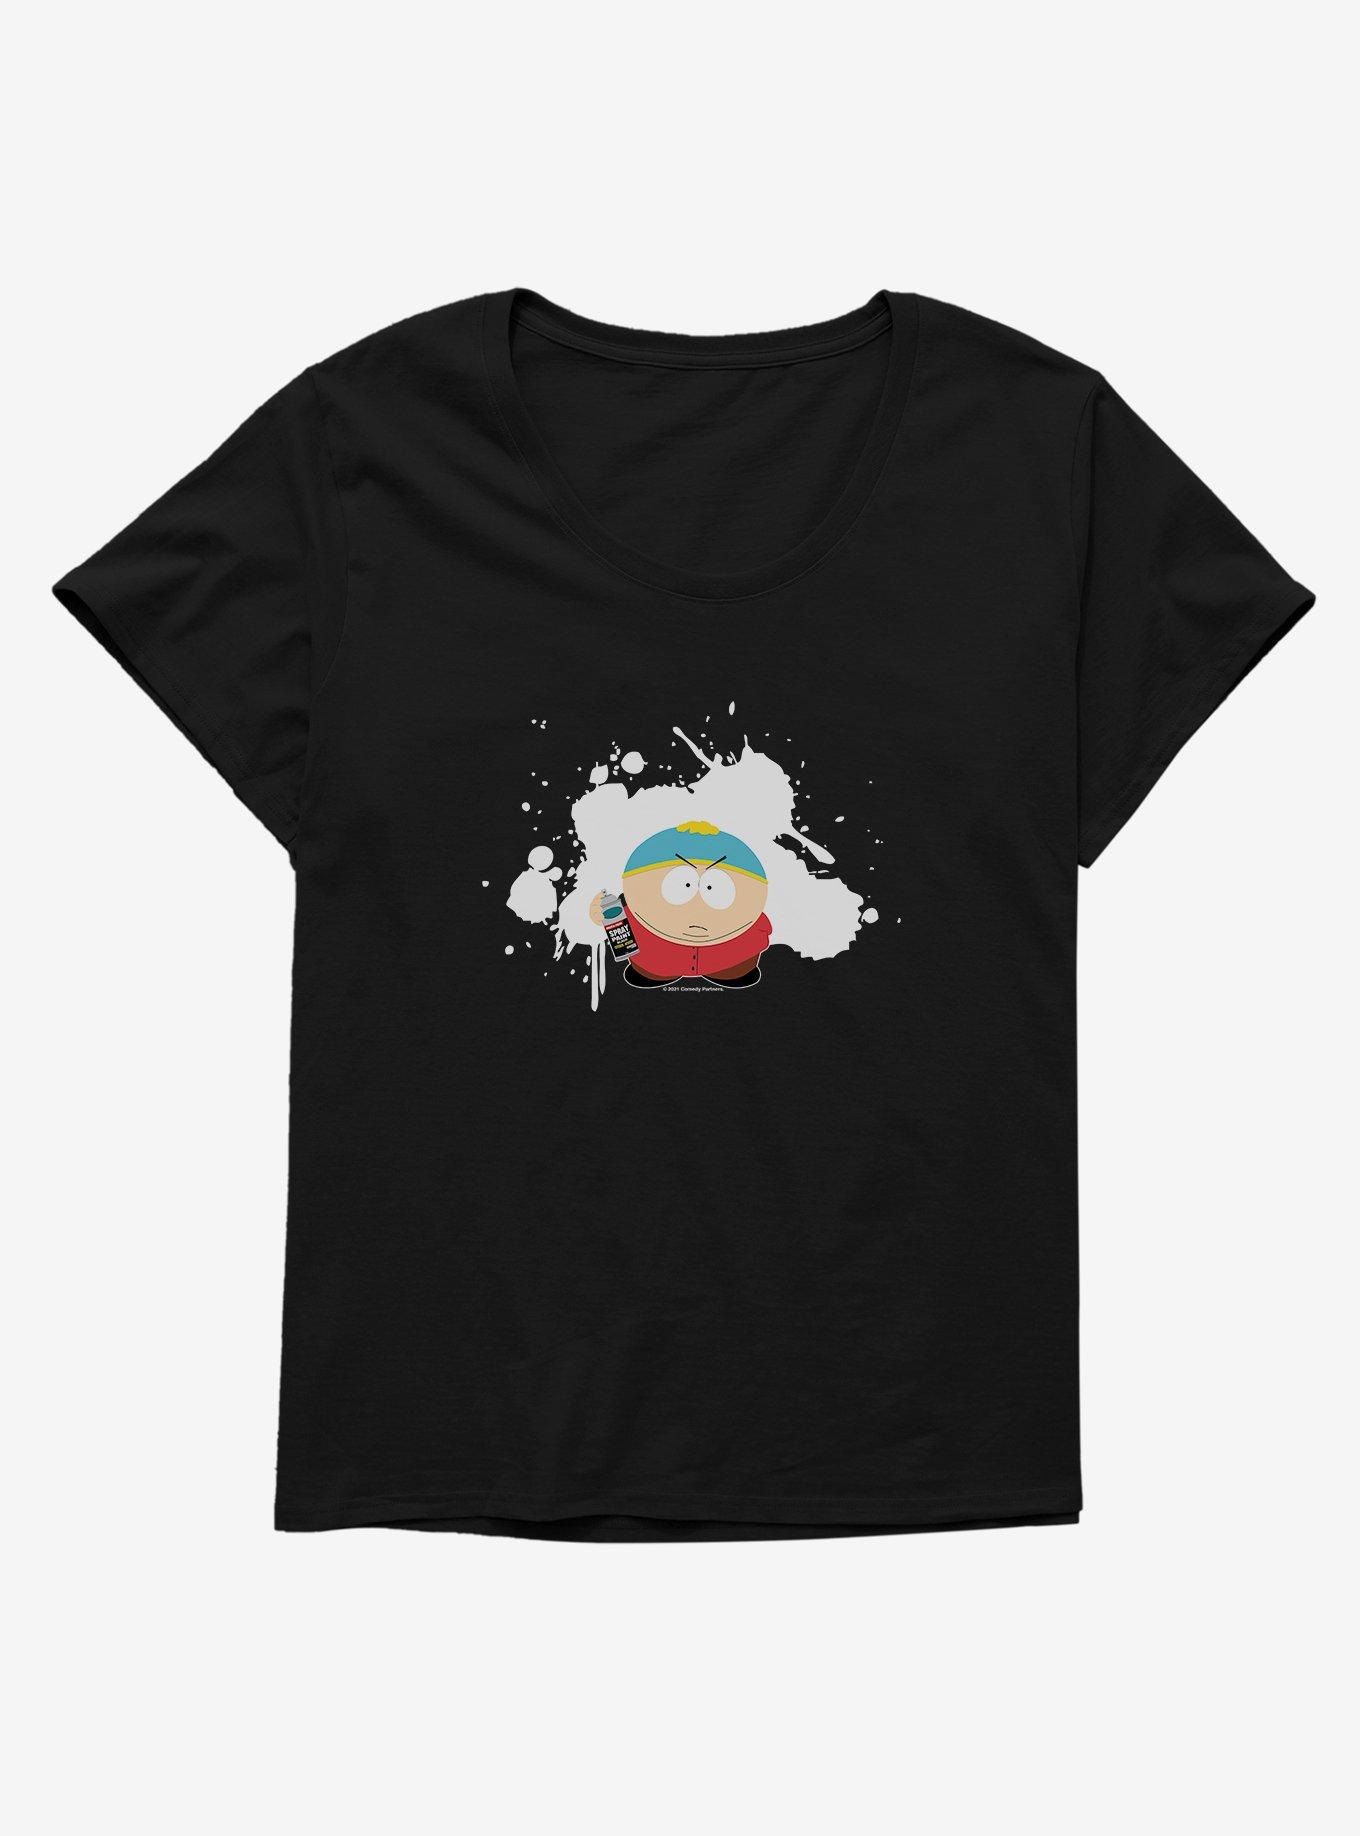 South Park Season Reference Cartman Spray Paint Girls T-Shirt Plus